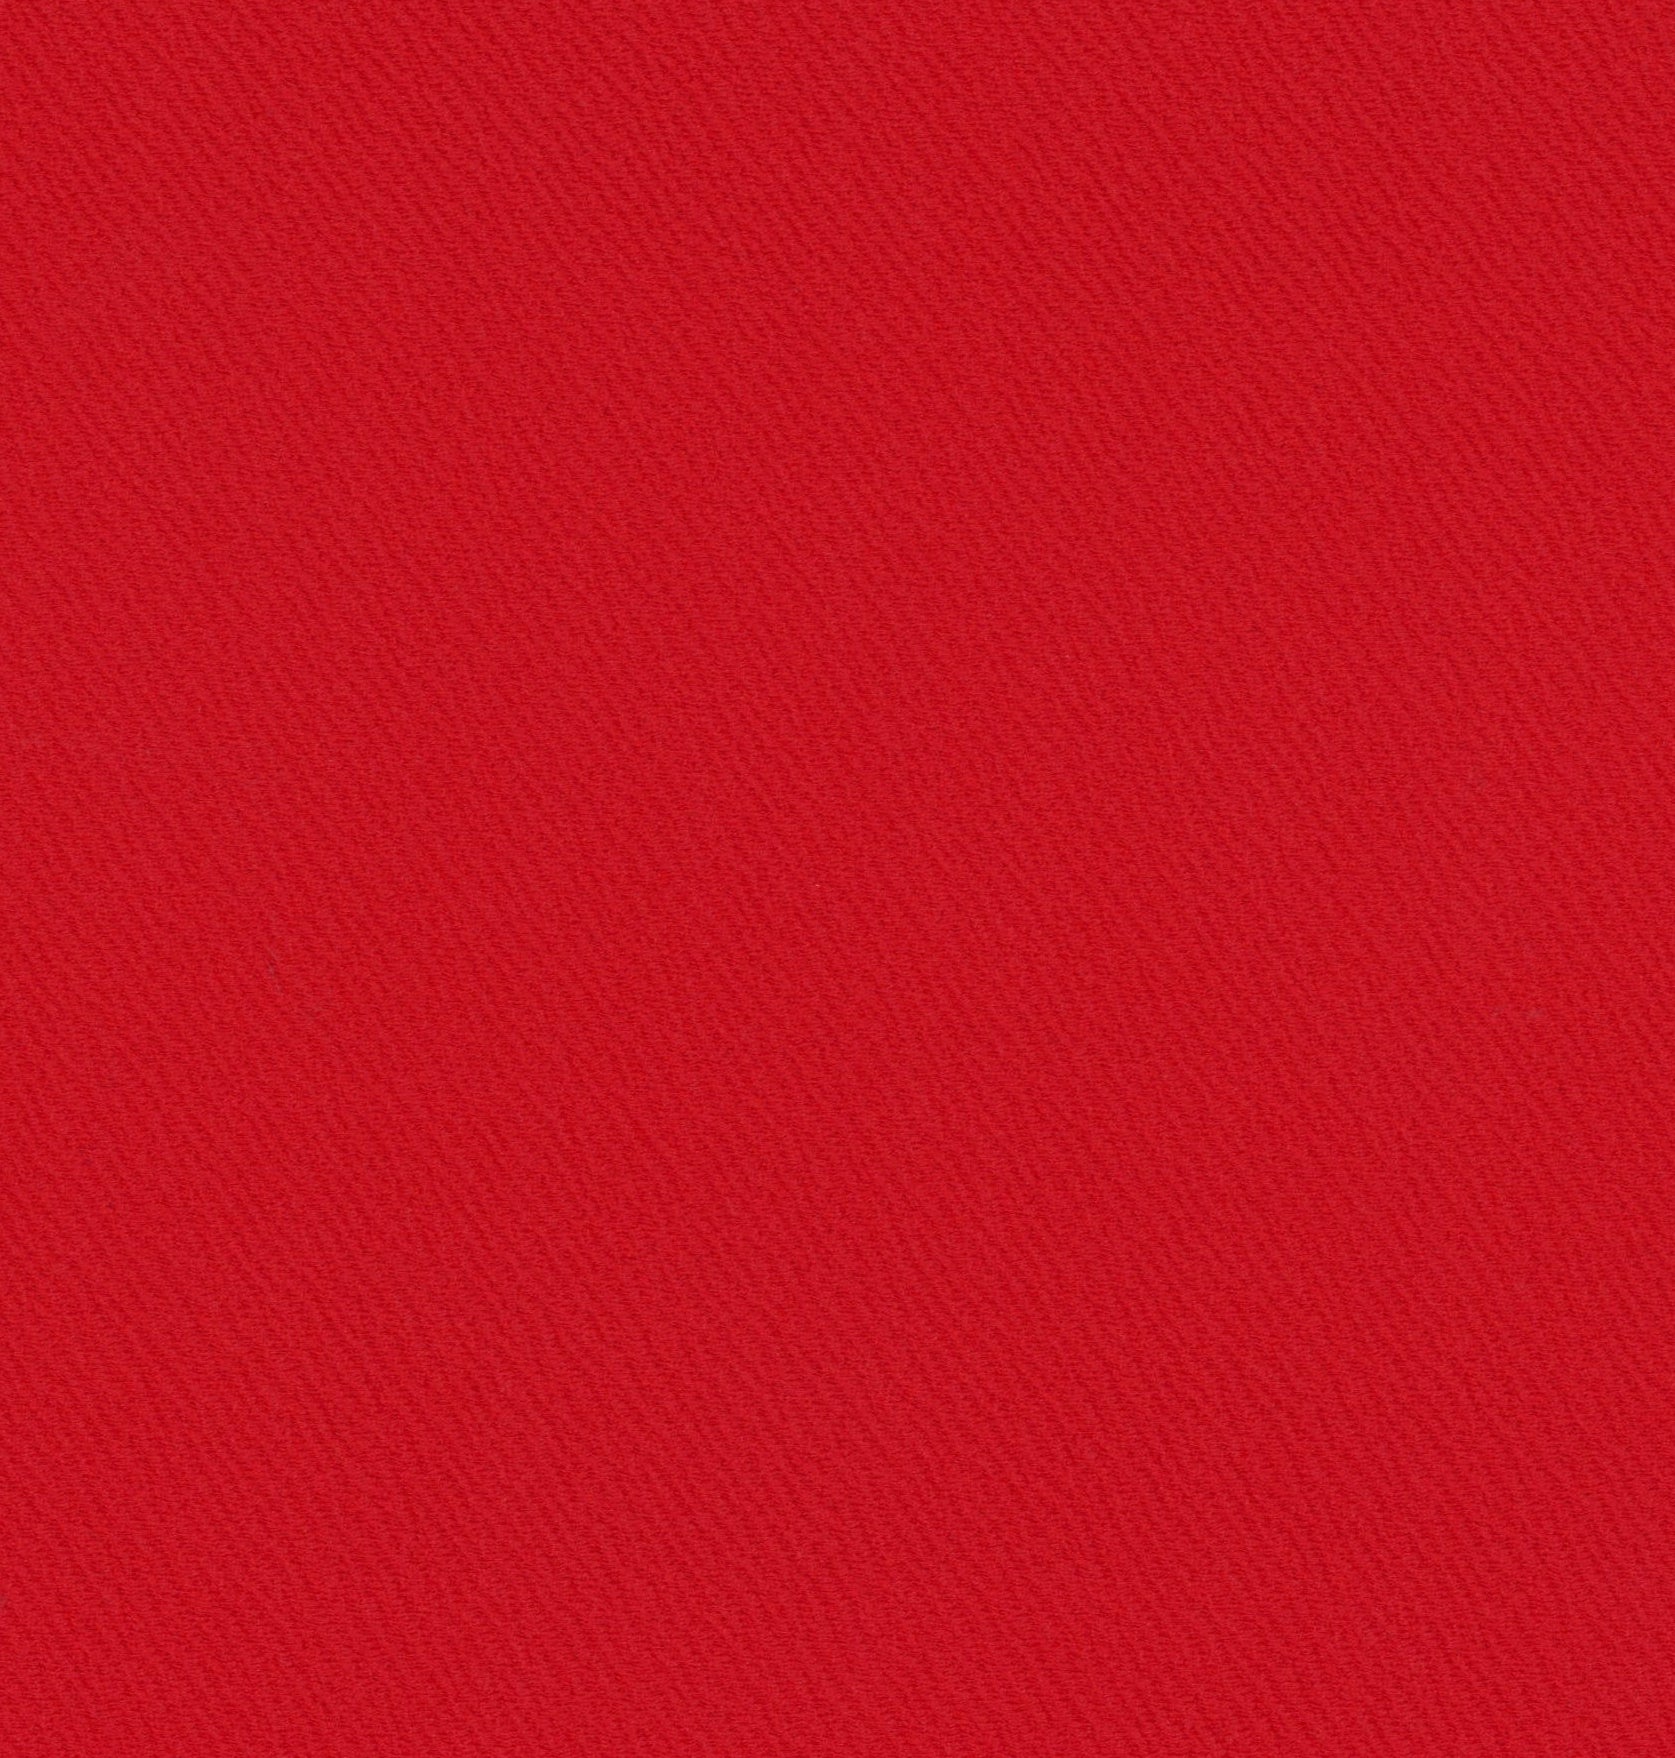 13018-05 Red Riverpool Jacquard Plain Dyed Blend 260g/yd 58" blend jacquard knit plain dyed polyester red spandex Solid Color, Jacquard - knit fabric - woven fabric - fabric company - fabric wholesale - fabric b2b - fabric factory - high quality fabric - hong kong fabric - fabric hk - acetate fabric - cotton fabric - linen fabric - metallic fabric - nylon fabric - polyester fabric - spandex fabric - chun wing hing - cwh hk - fabric worldwide ship - 針織布 - 梳織布 - 布料公司- 布料批發 - 香港布料 - 秦榮興